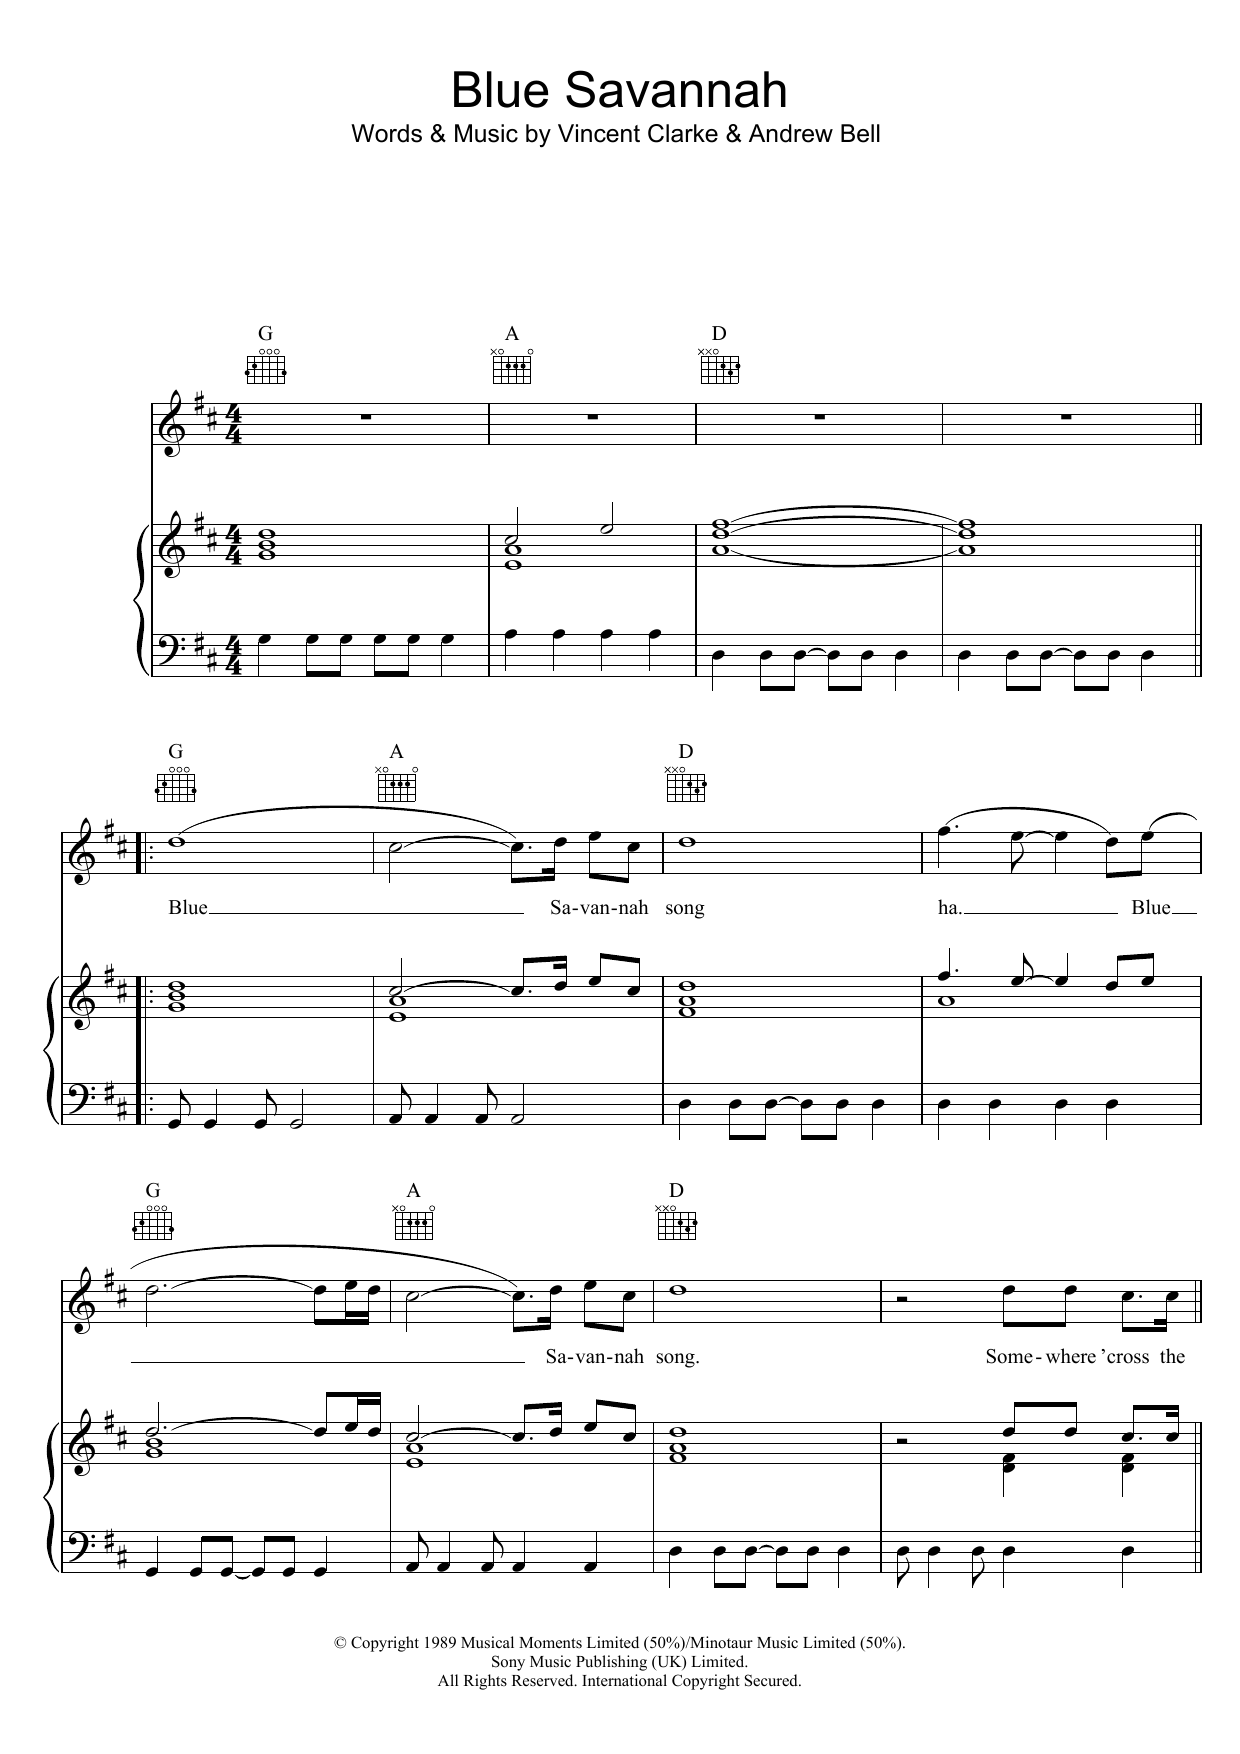 Erasure Blue Savannah sheet music notes and chords arranged for Piano, Vocal & Guitar Chords